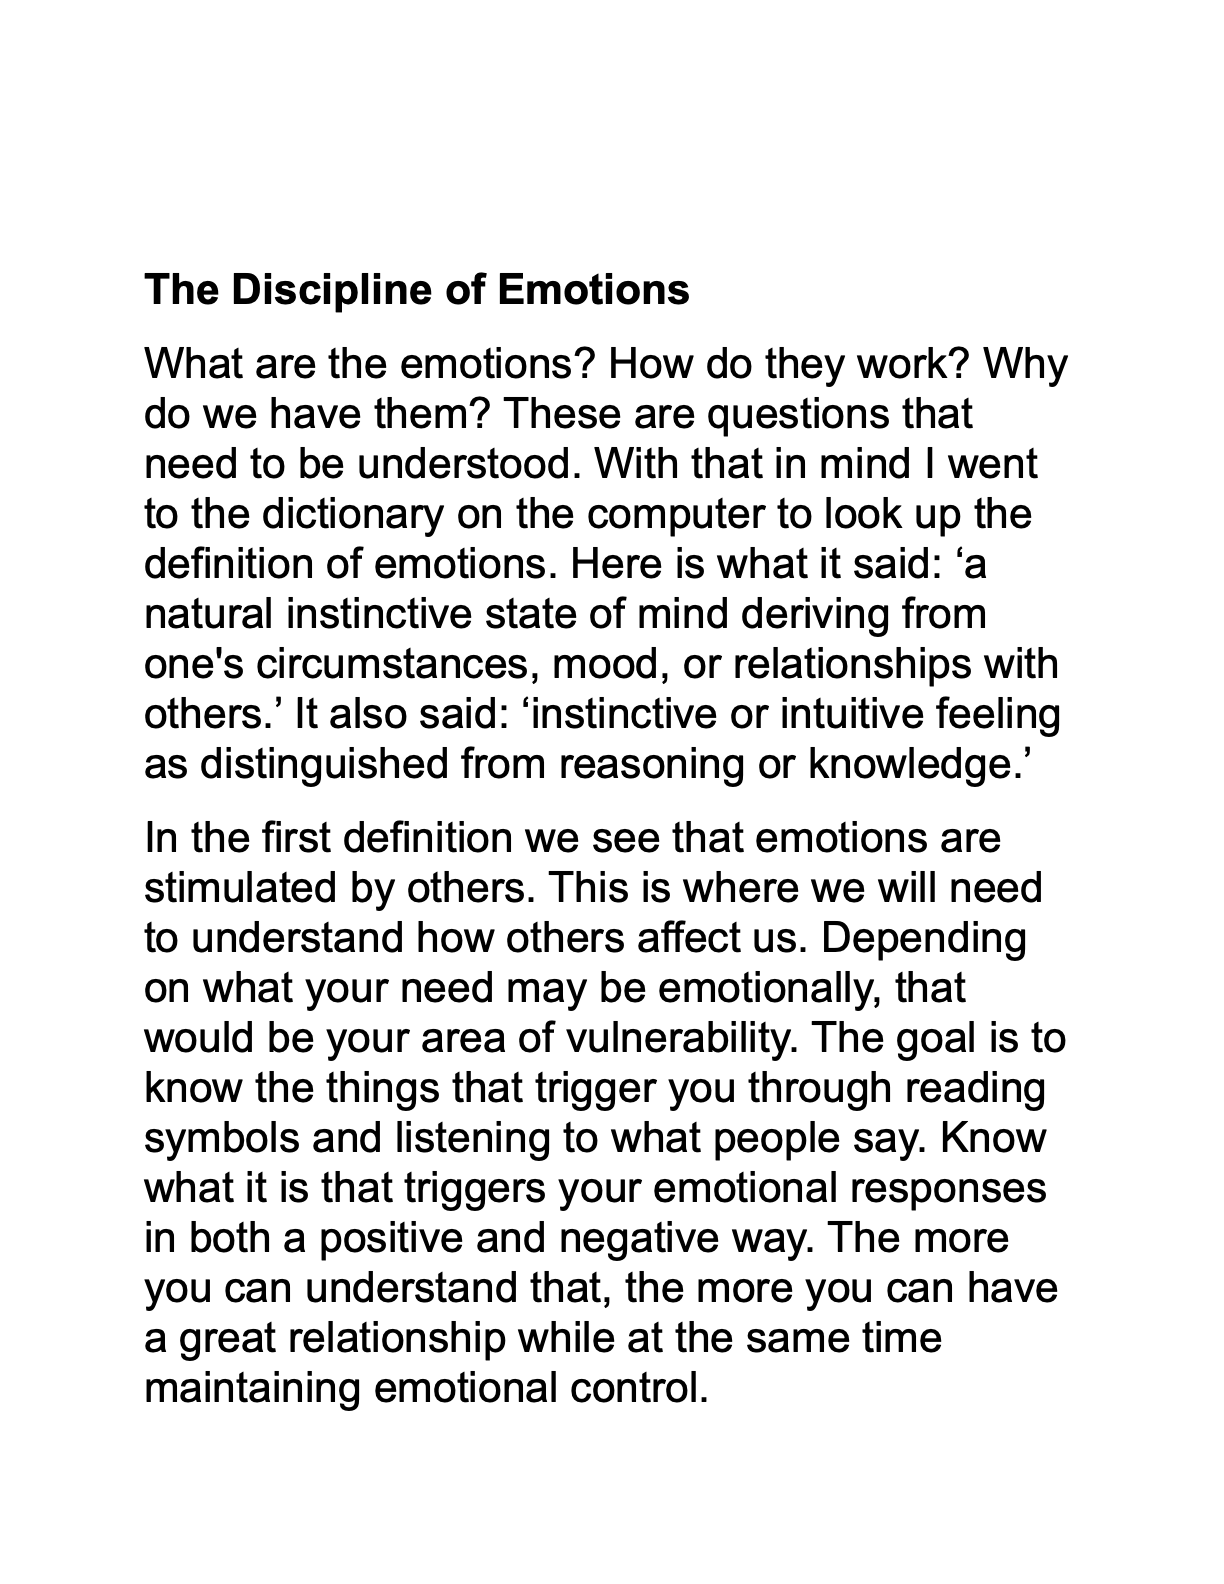 Discipline of Emotions